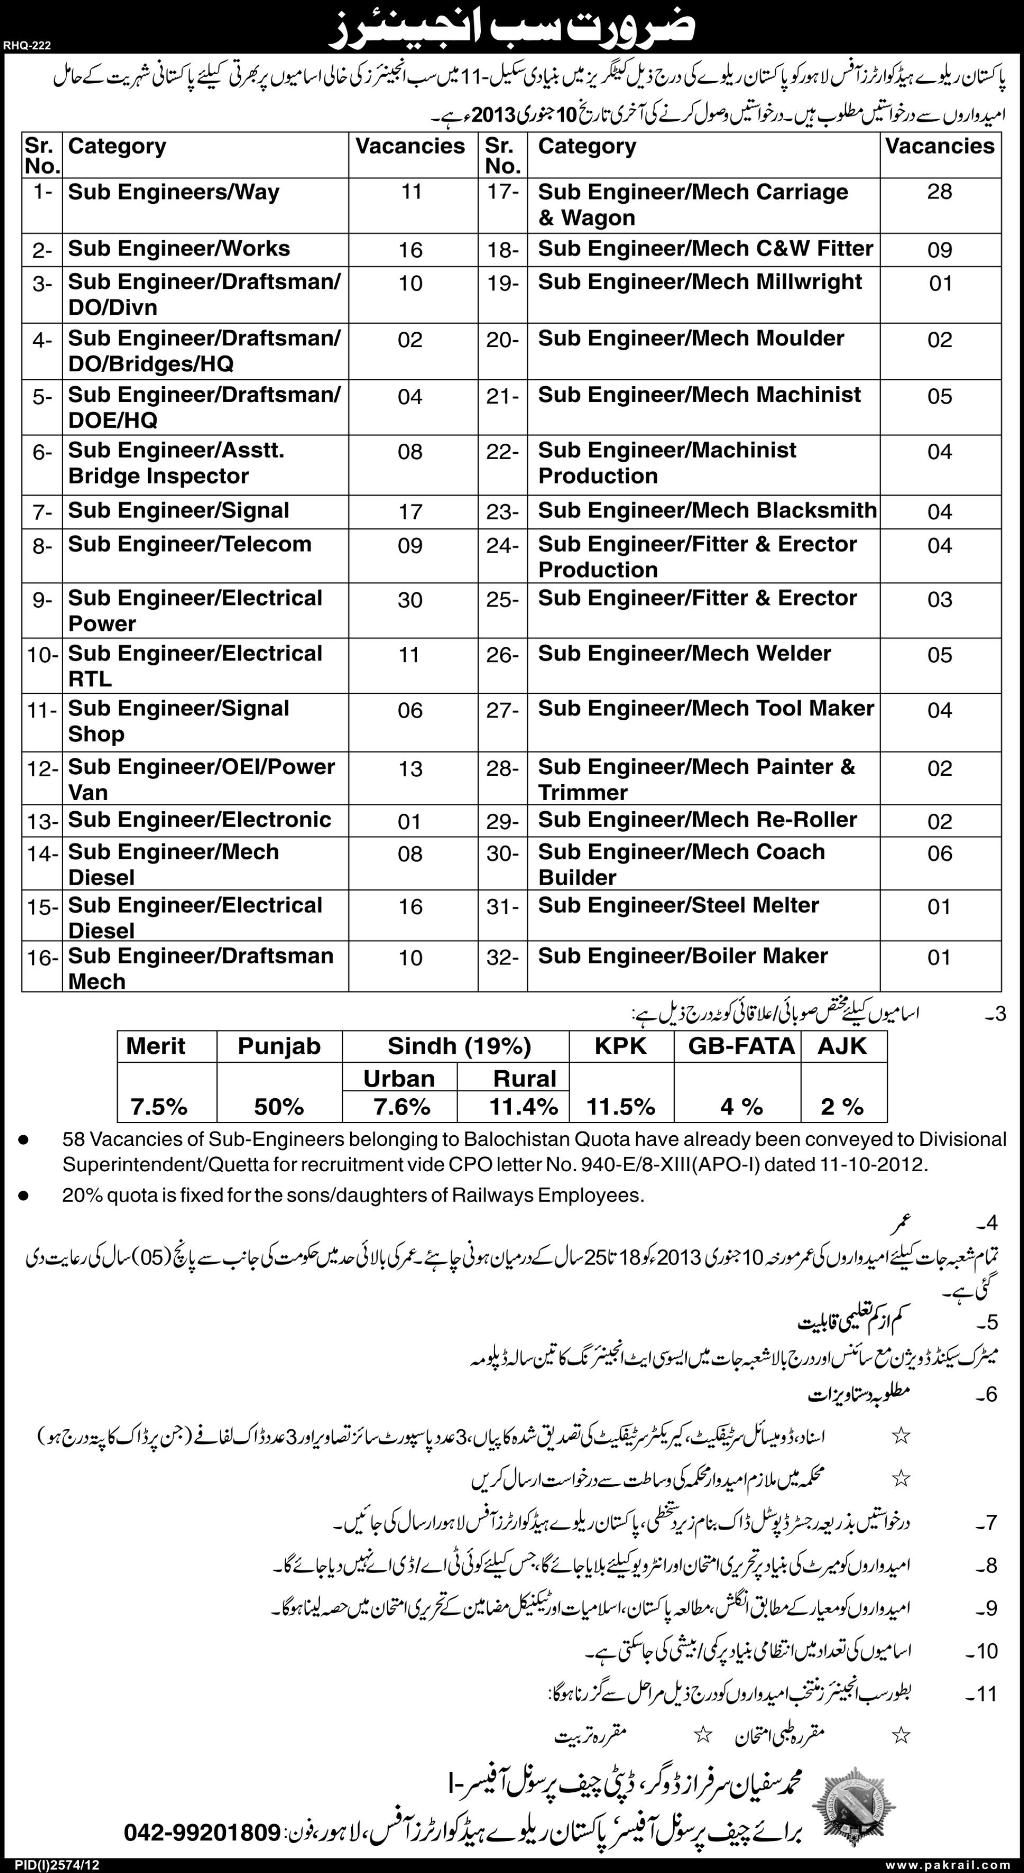 Pakistan Railway Jobs in Lahore 2012 December for Sub Engineers